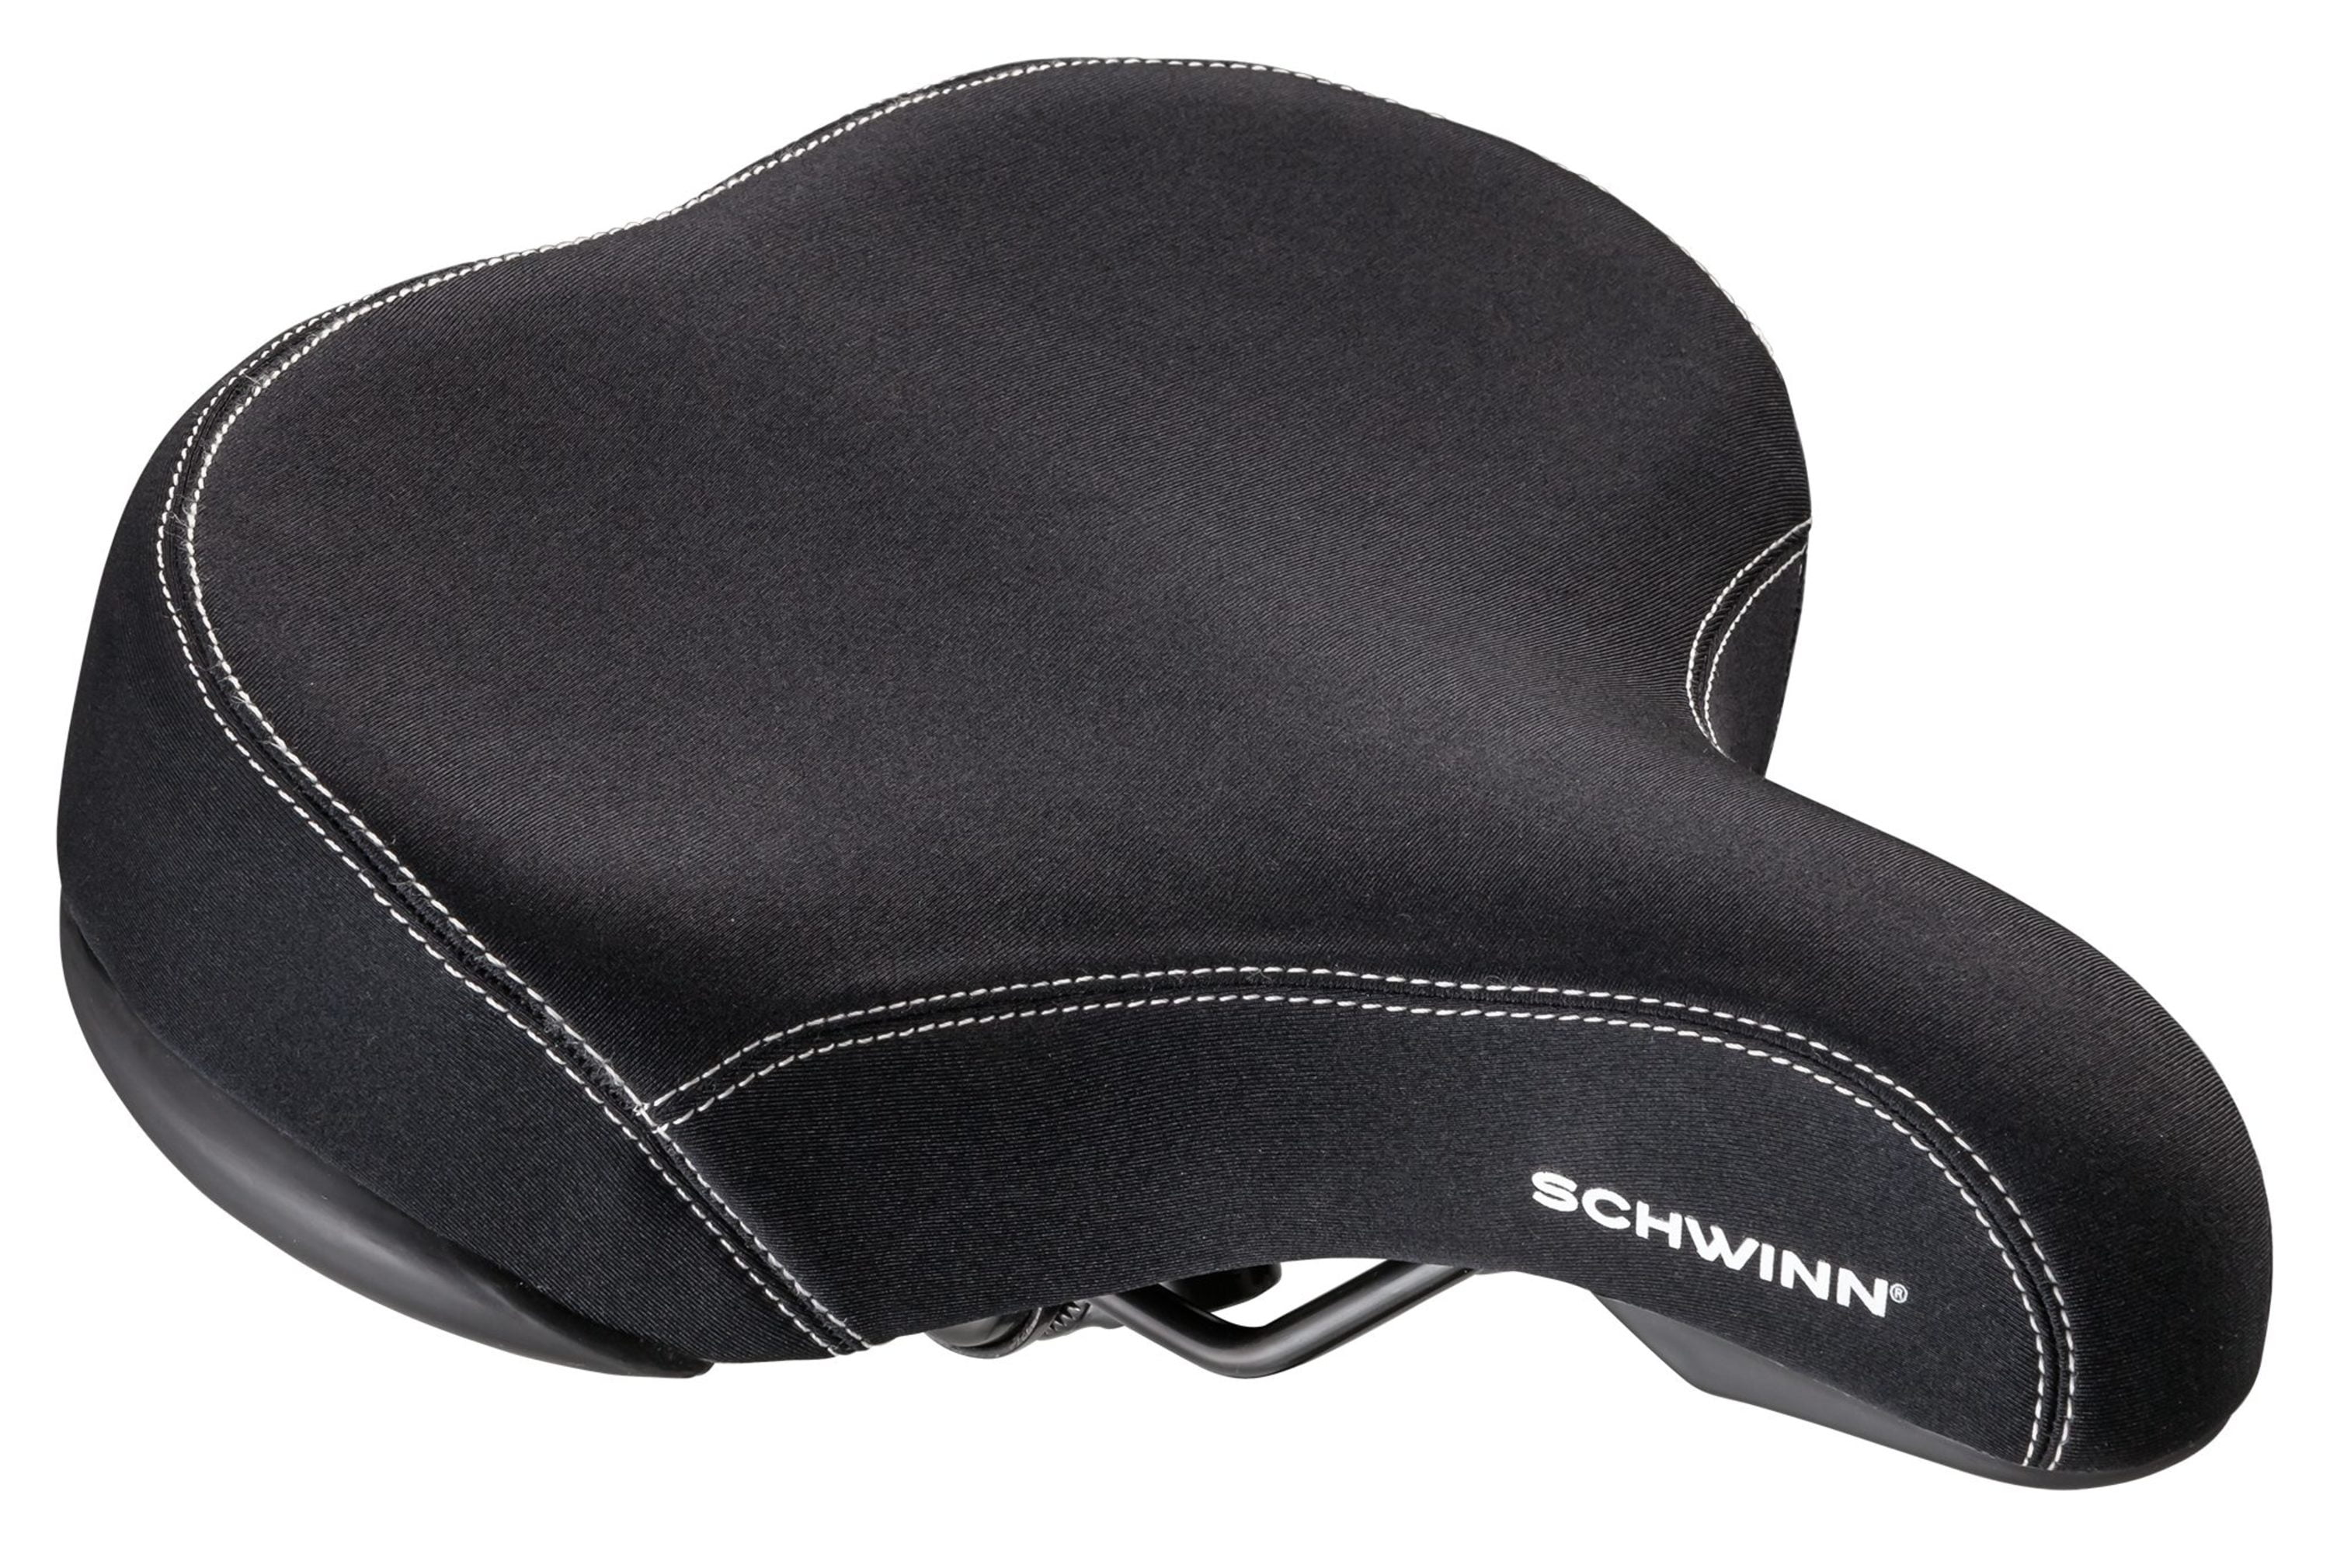 Schwinn Super Wide Breeze Saddle Foam Comfort Weather Resistant Sw78821 for sale online